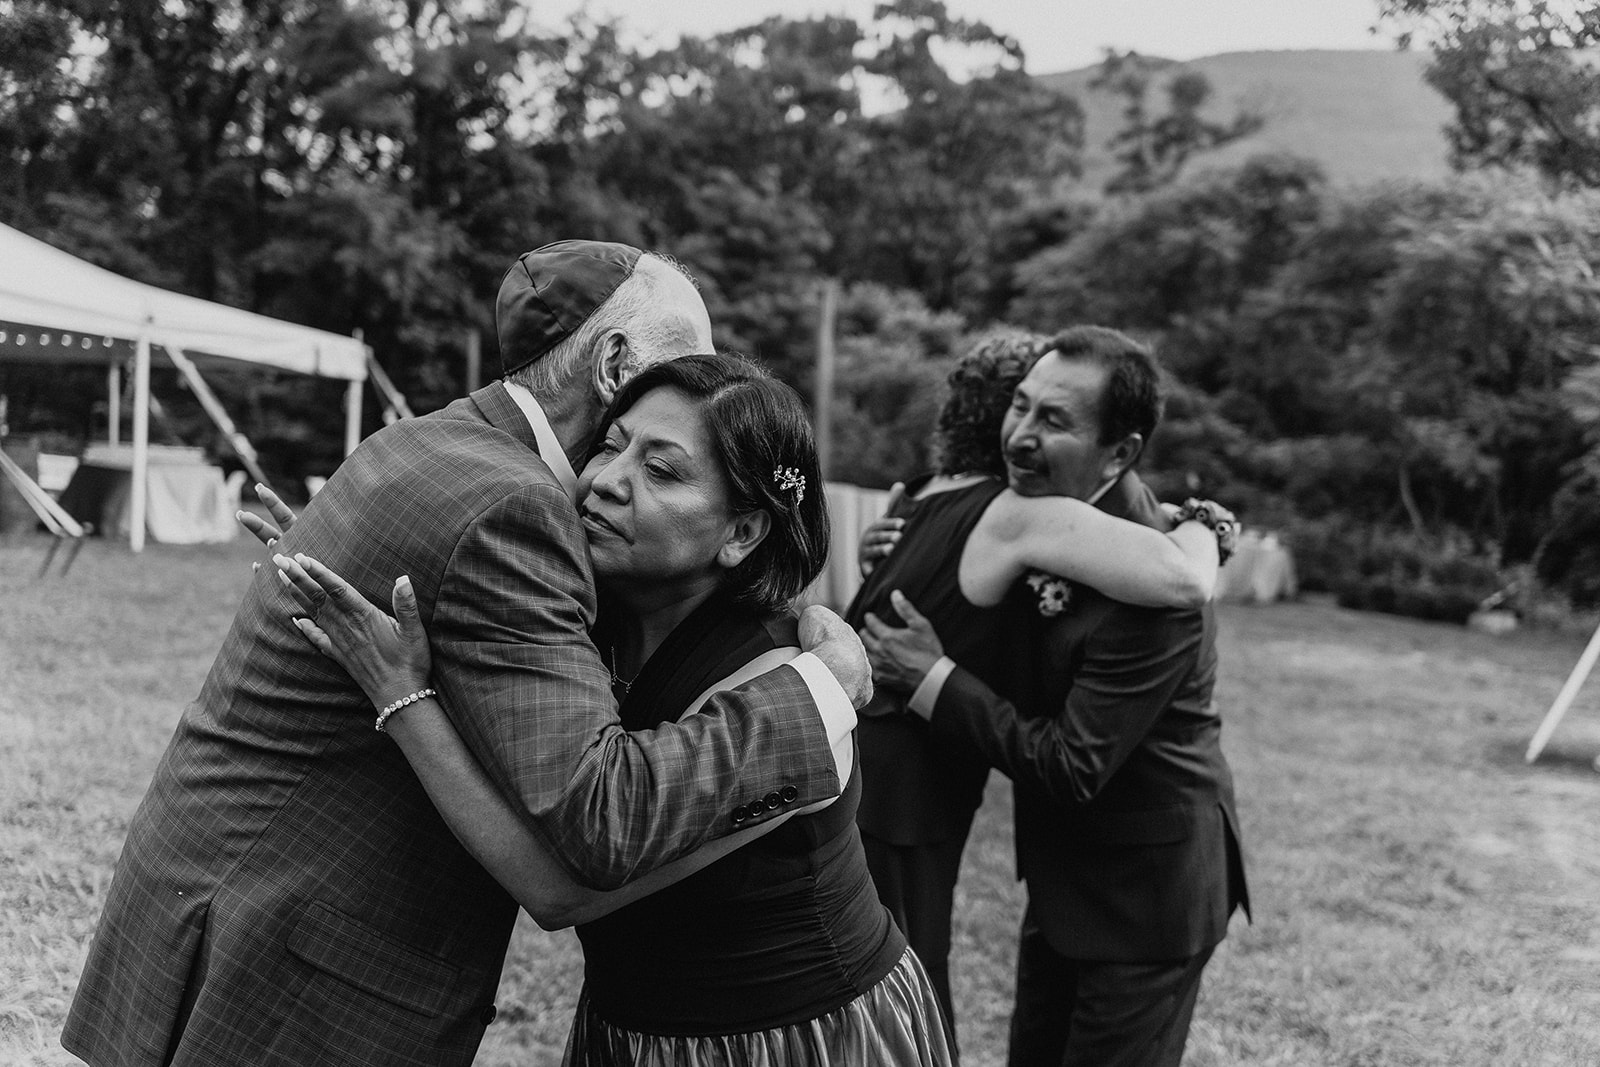 Mexican Jewish Wedding in Woodstock, NY